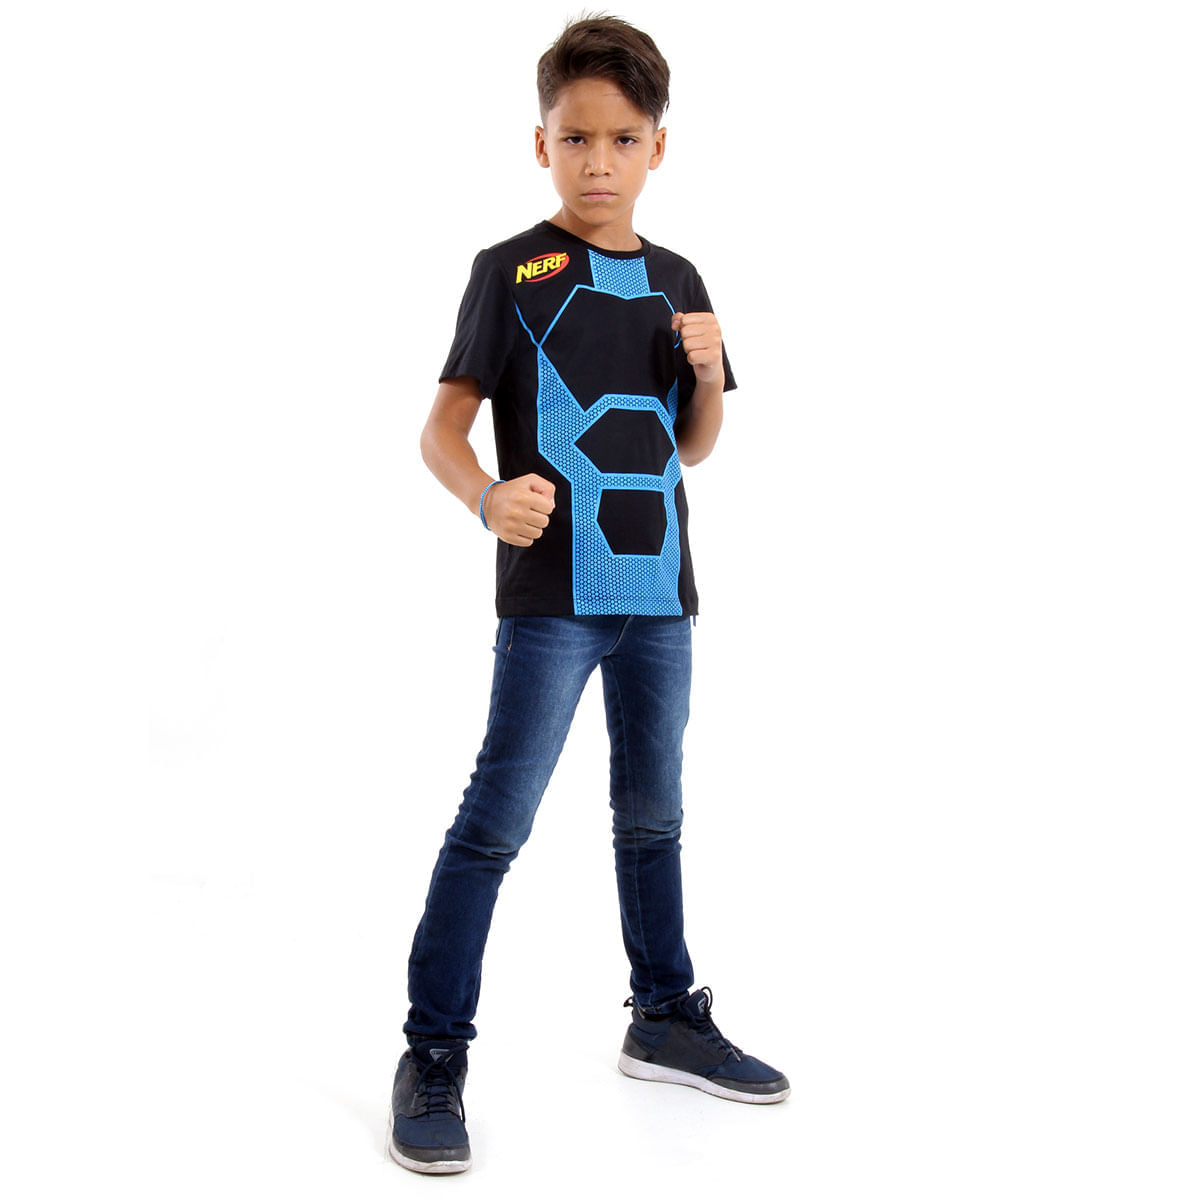 Camiseta Nerf Azul - Sulamericana P / UNICA